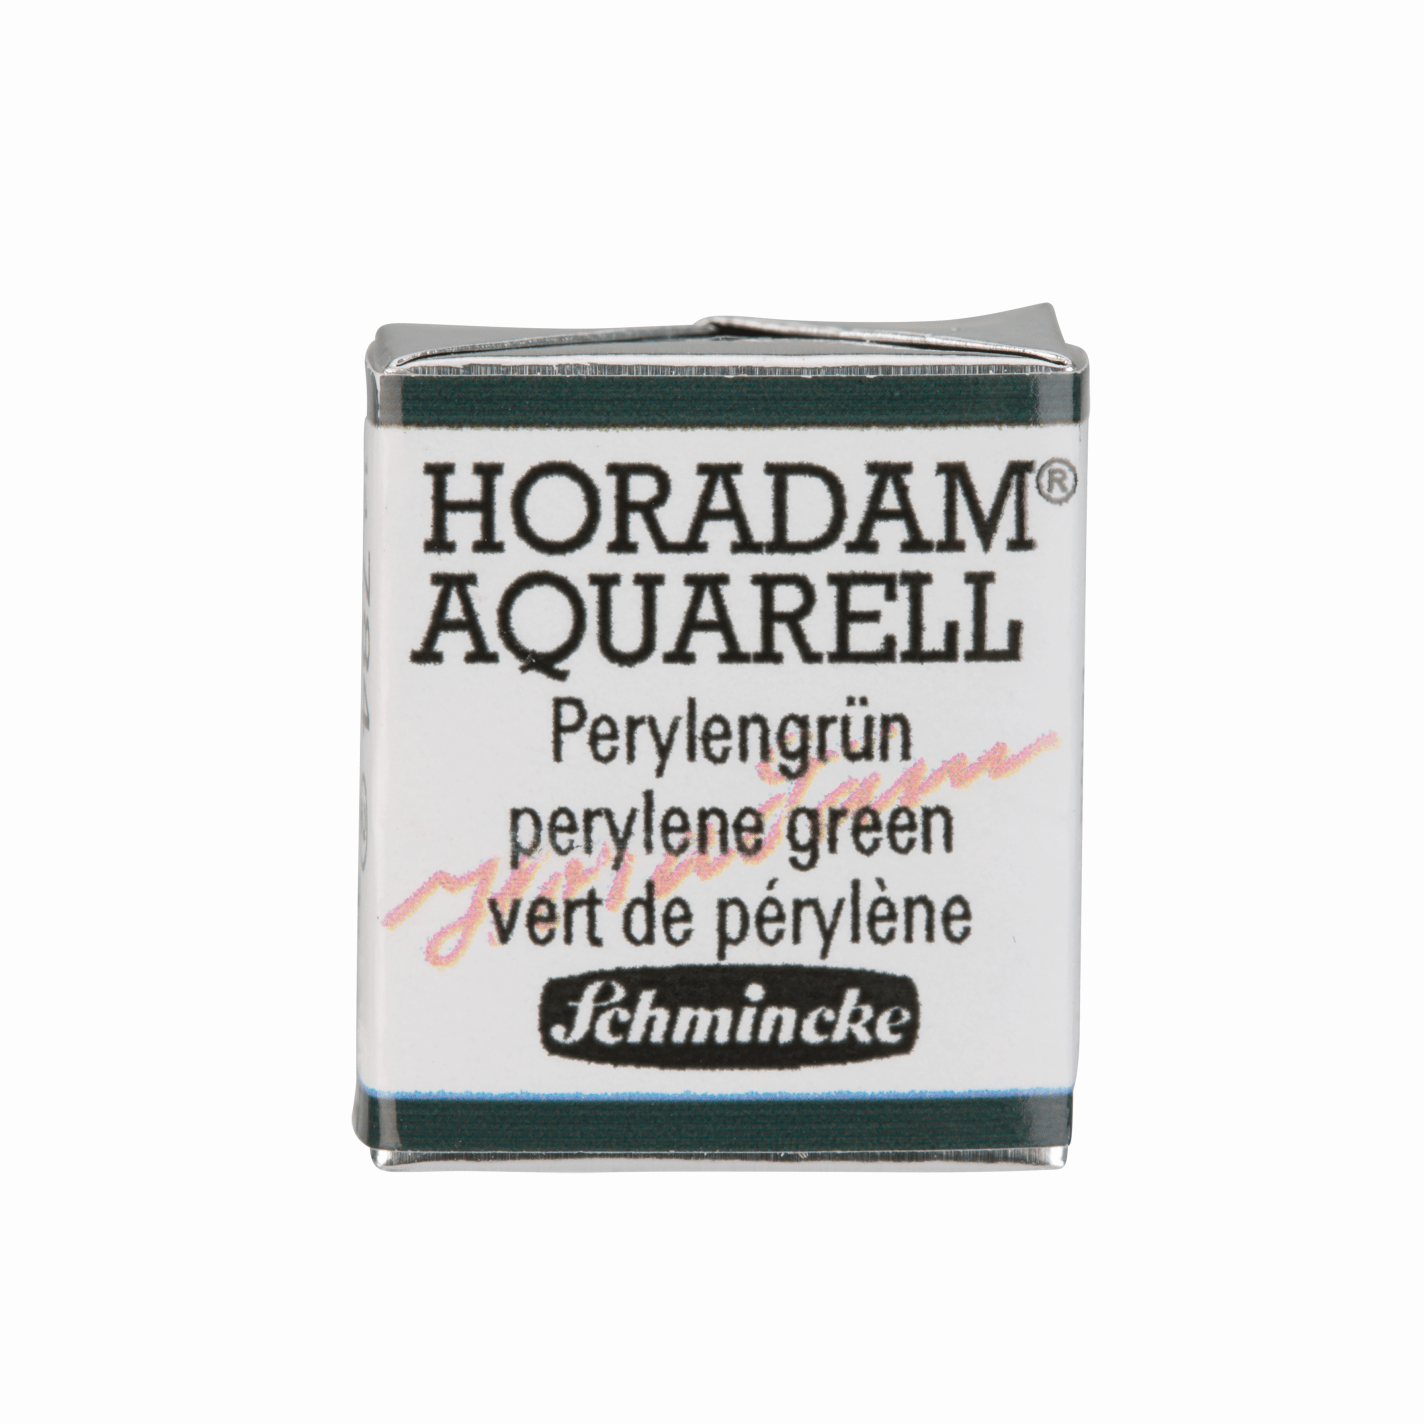 Schmincke Horadam Aquarell pans 1/2 pan Perylene Green